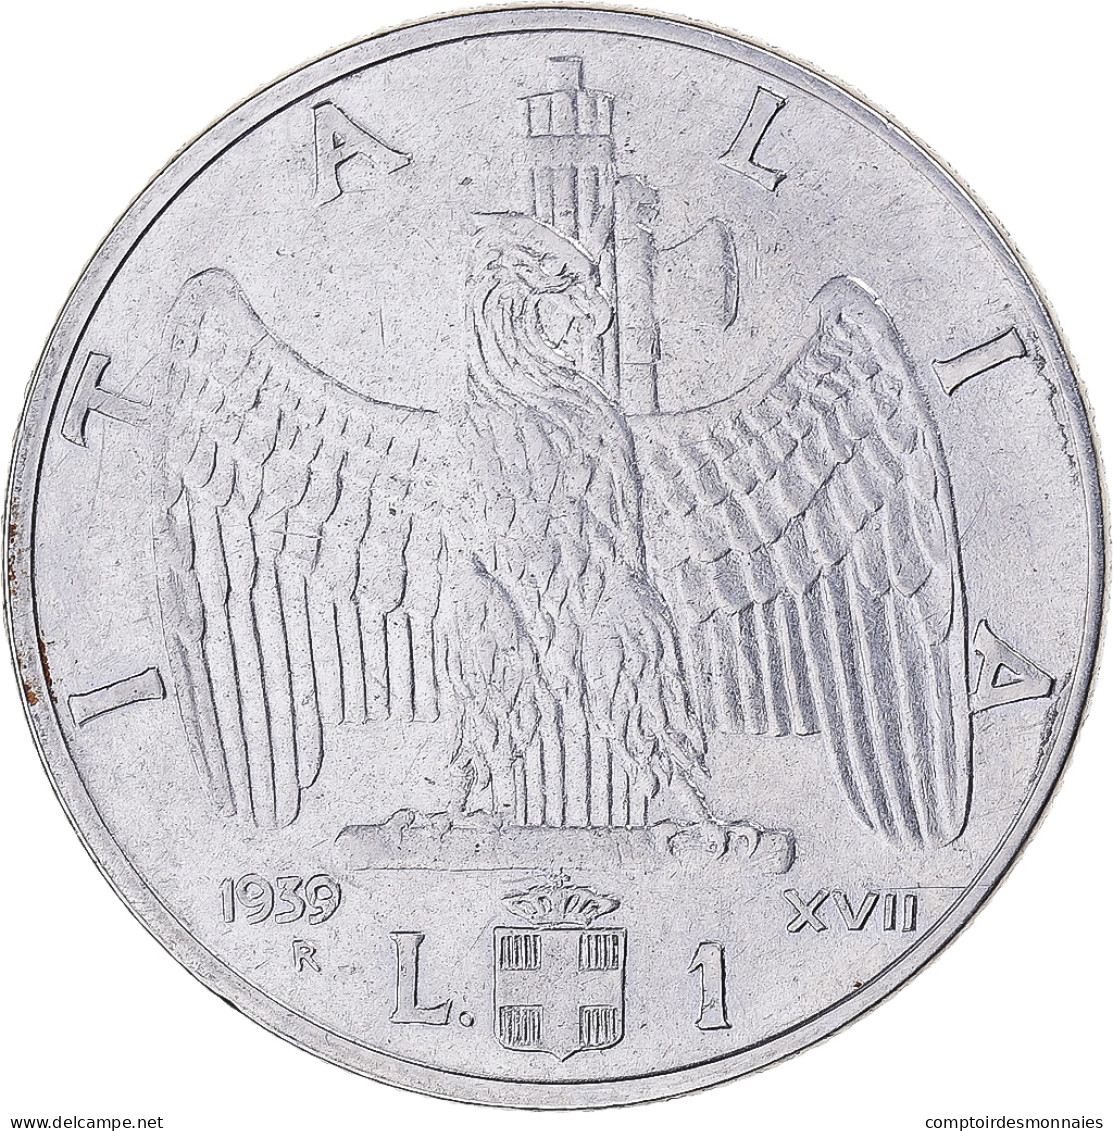 Monnaie, Italie, Lira, 1939, Rome, TTB+, Acmonital (austénitique), KM:77a - 1 Lira